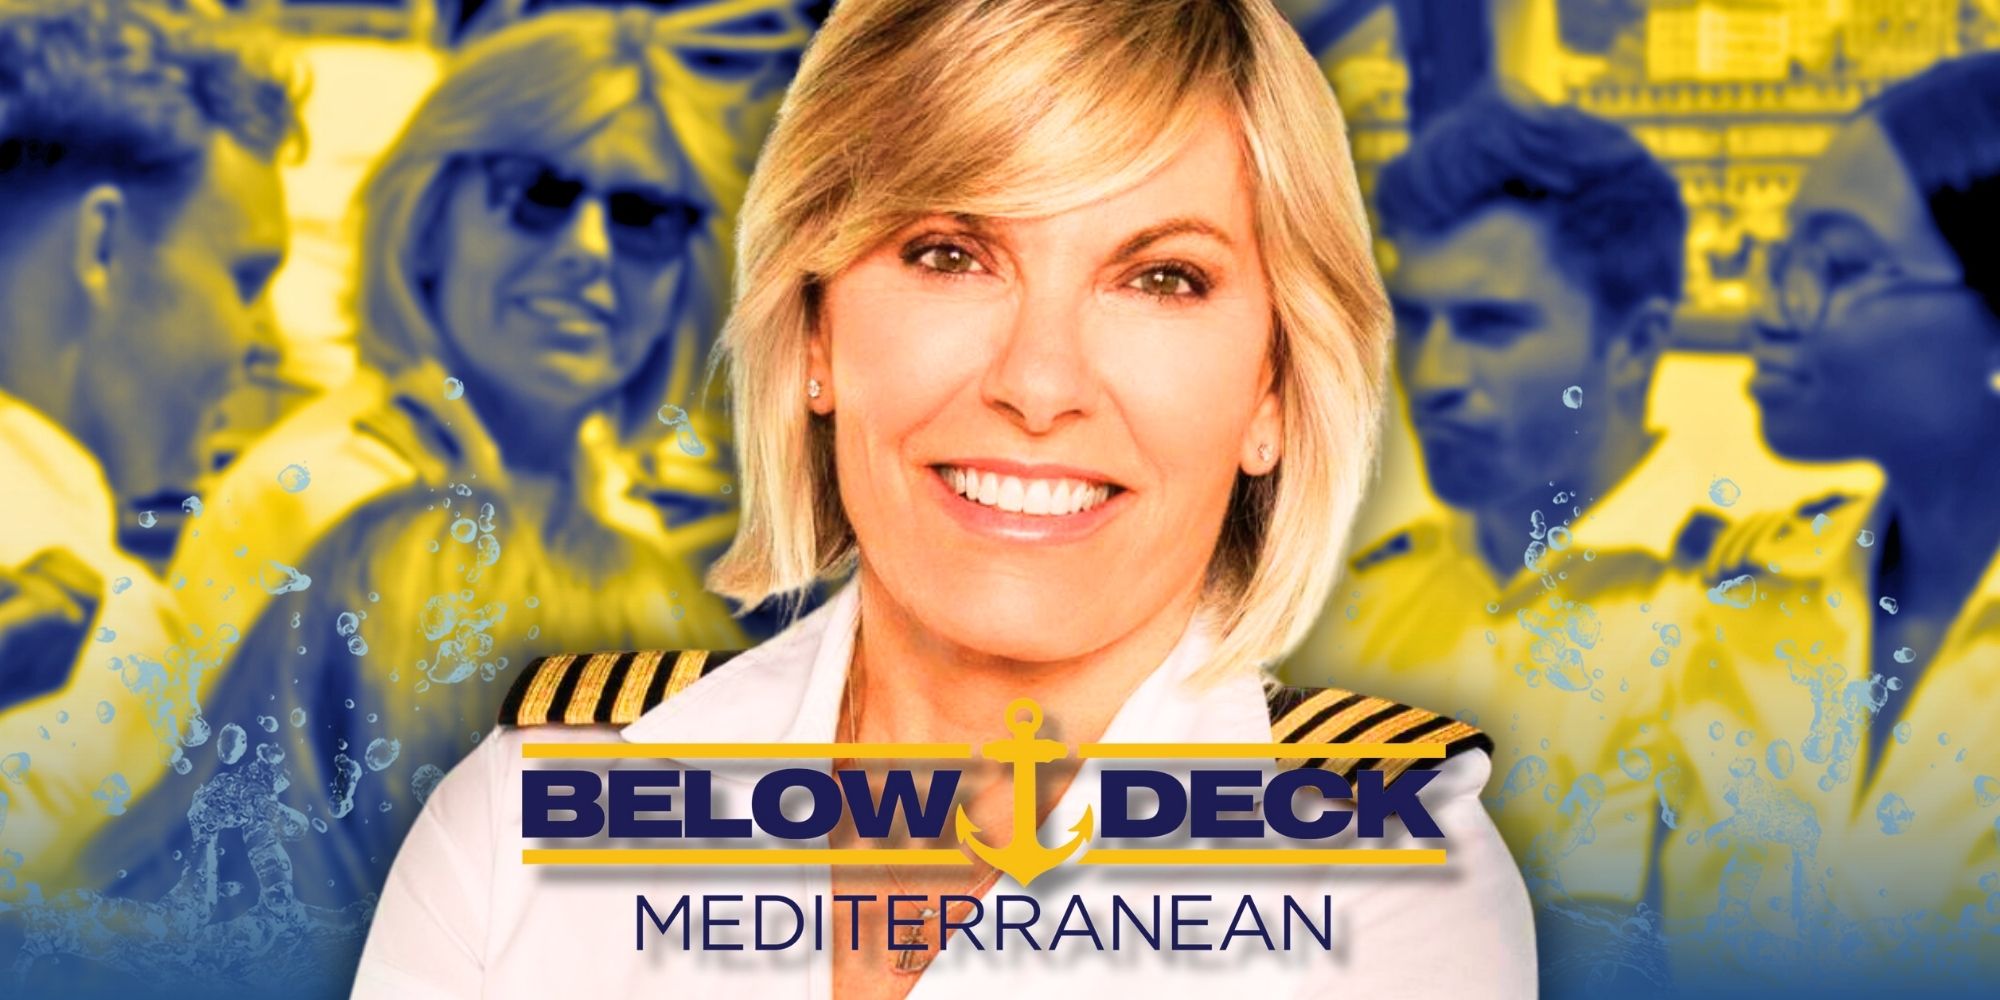 Below Deck Mediterranean Season 8 cast with Captain Sandy in the front